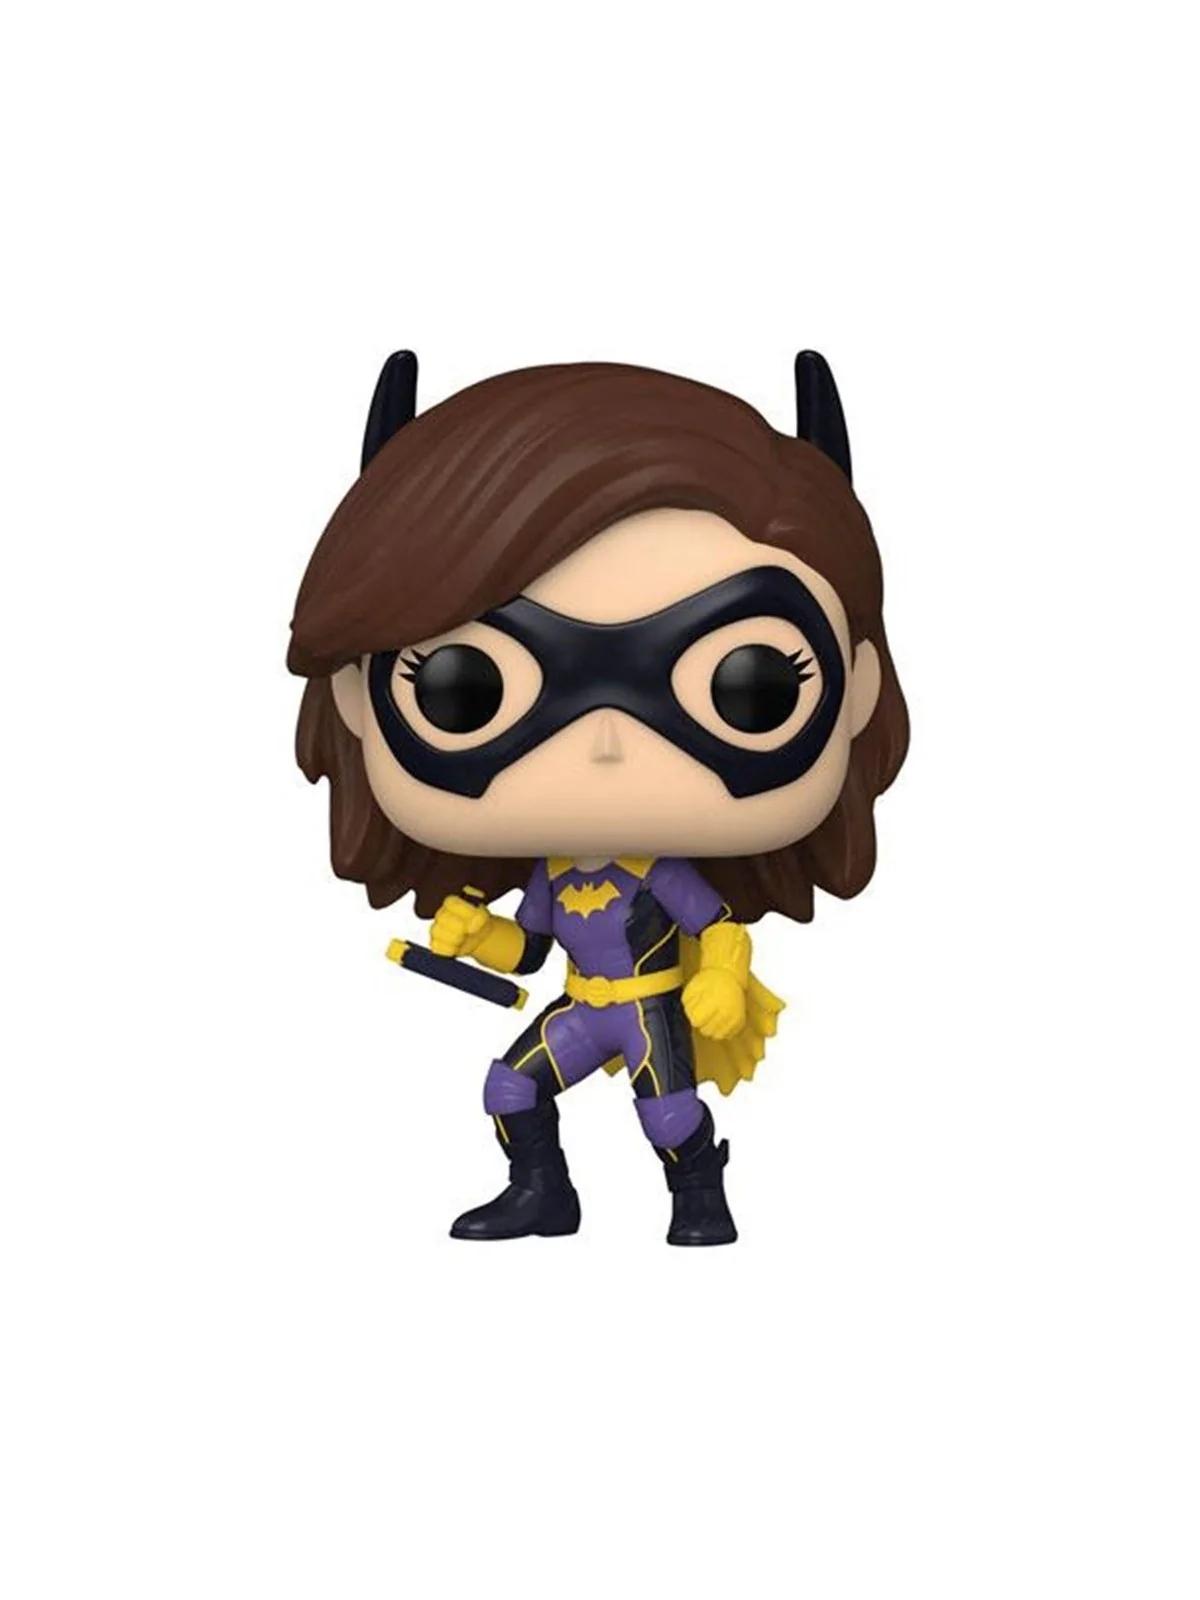 Comprar Funko POP! Gotham Knights: Batgirl (893) barato al mejor preci